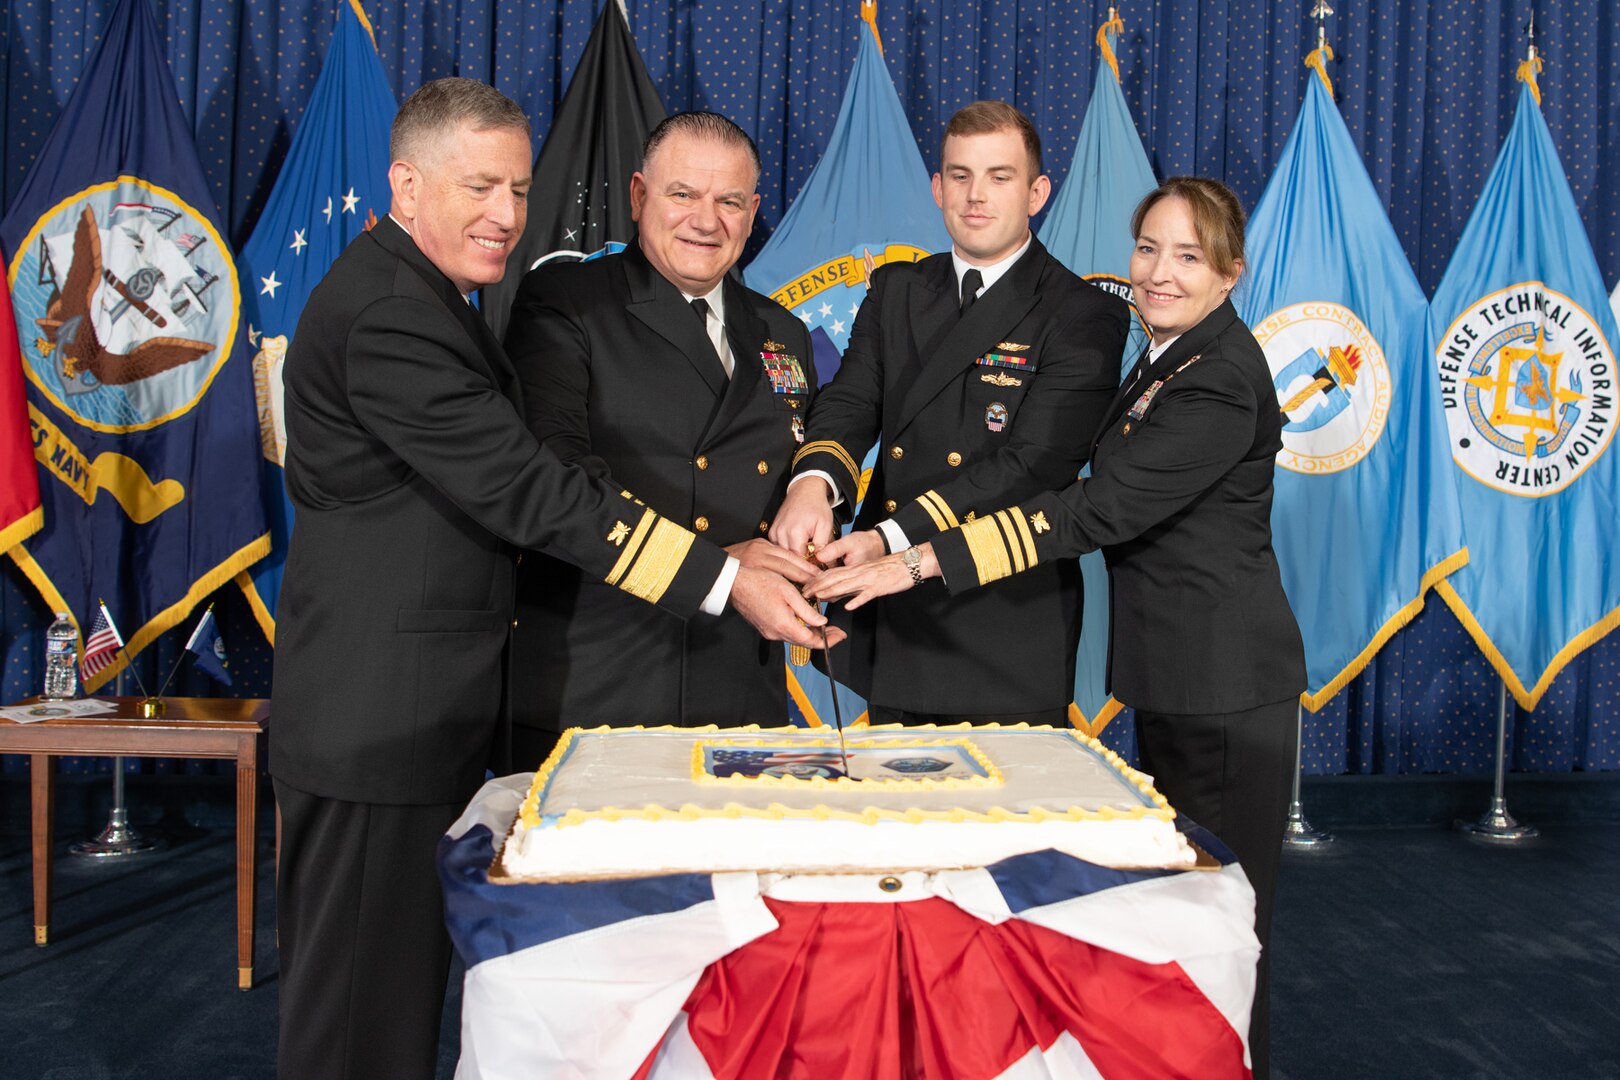 A group of sailors cut a Navy birthday cake.